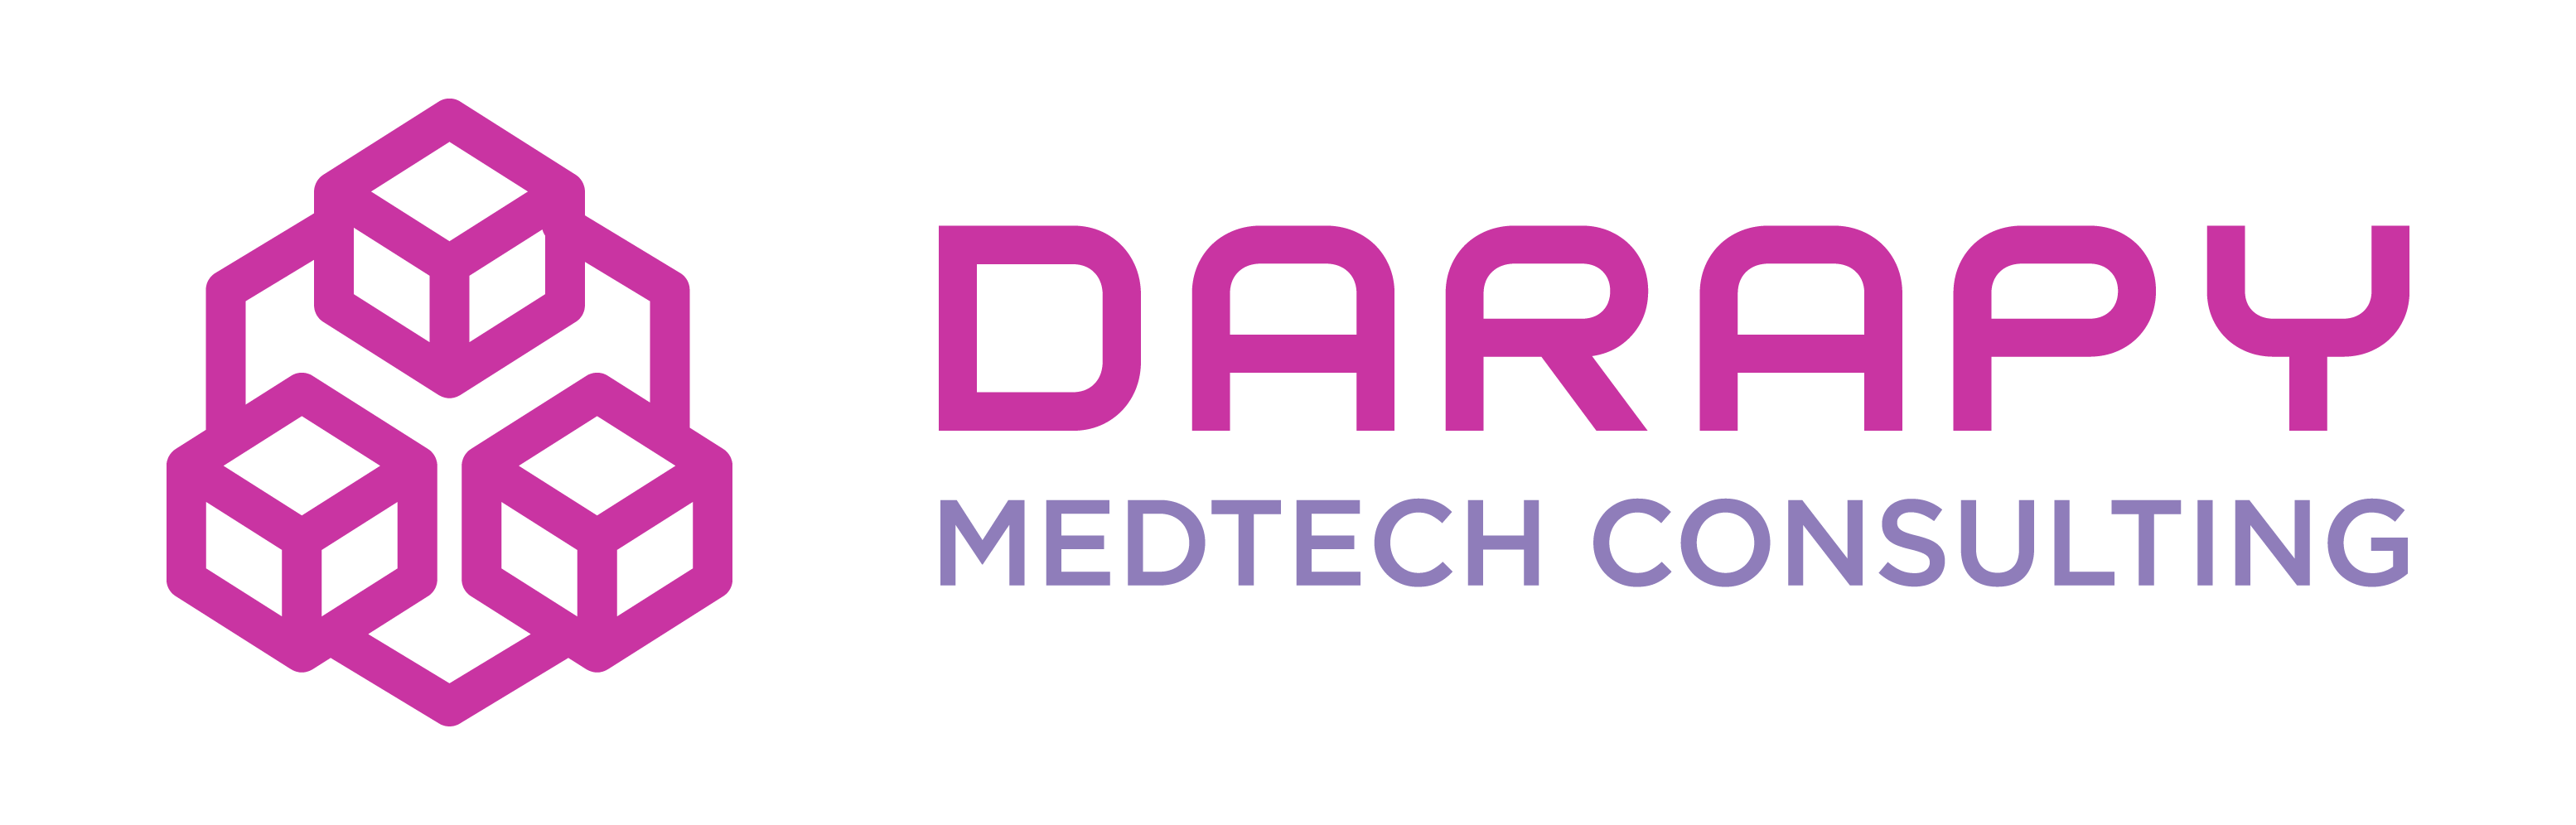 Darapy-Medtech-Consulting-Logo-Principal